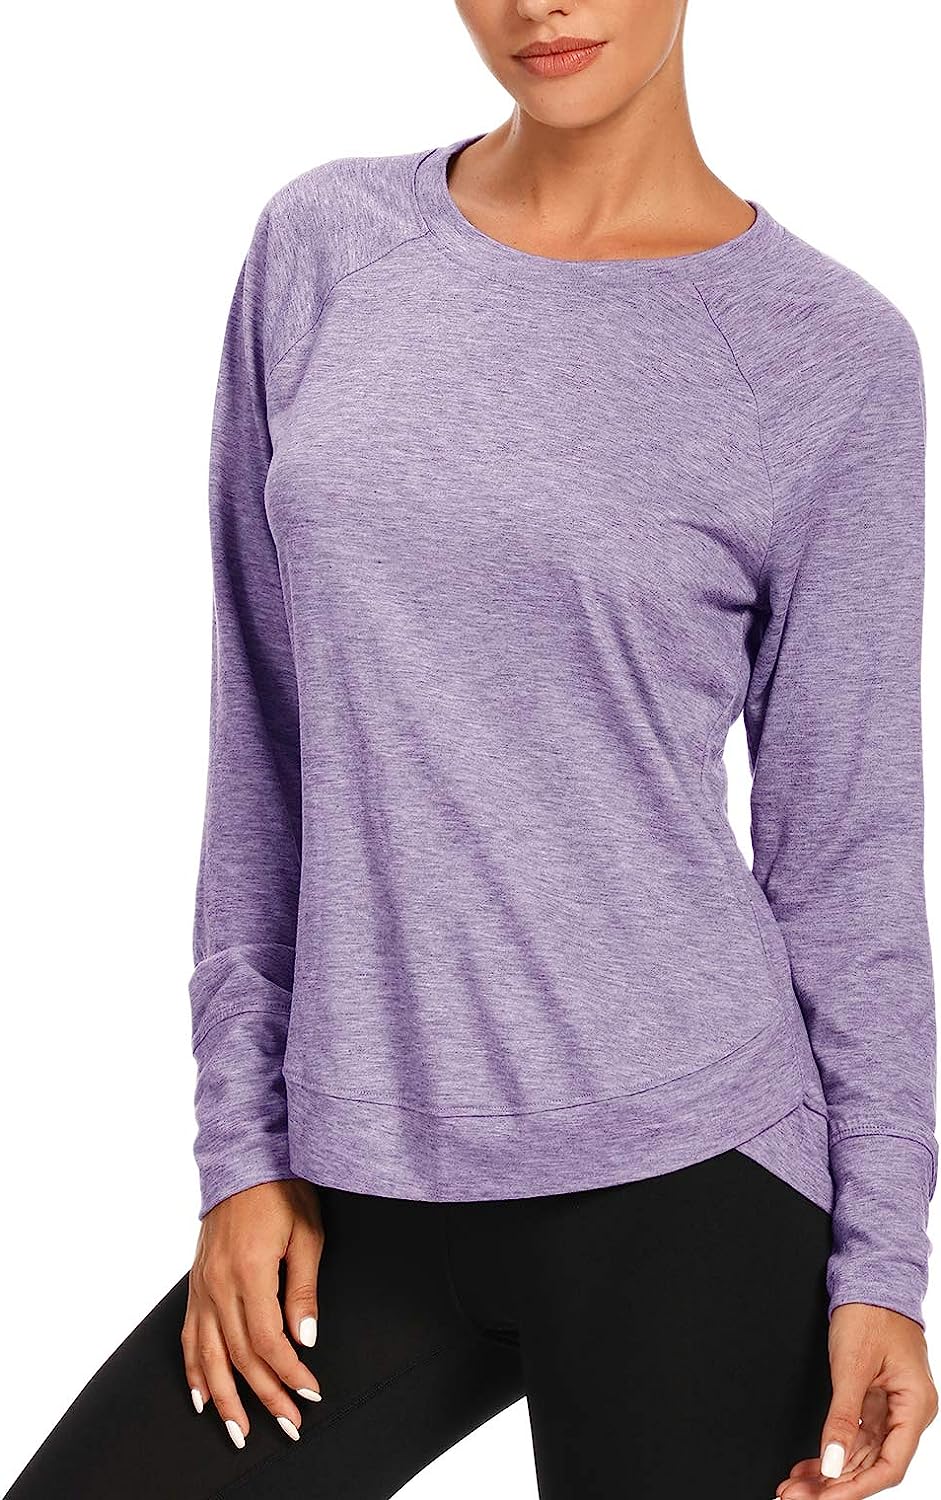 Muzniuer Womens Long Sleeve Workout Shirts-Plain Long Sleeve